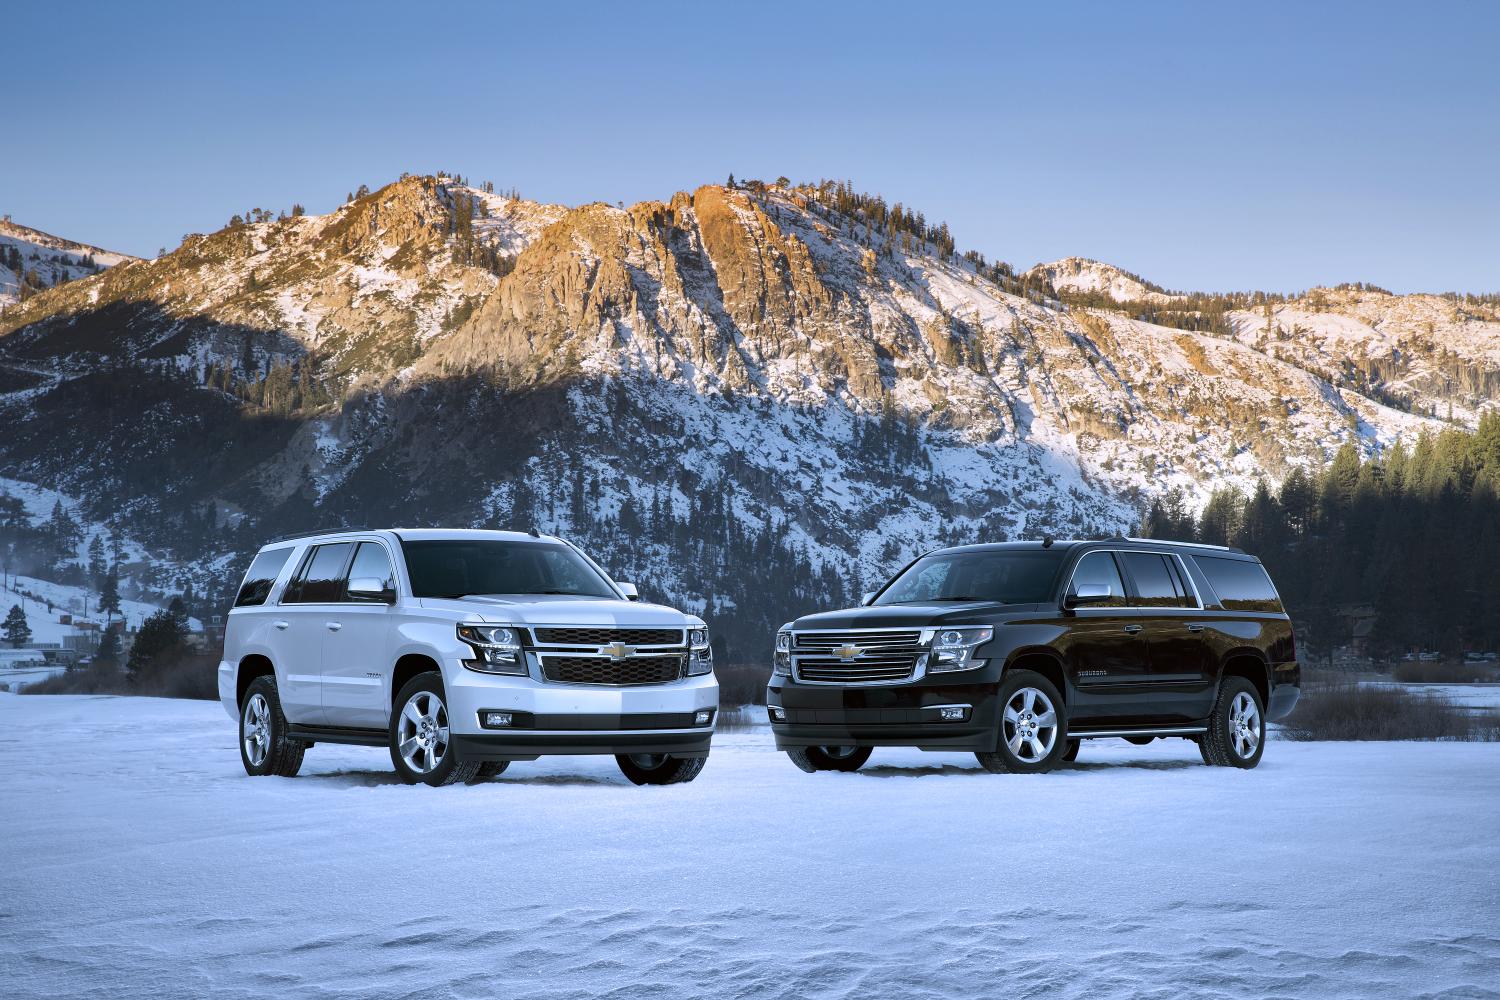 2015 Chevrolet Suburban and Tahoe